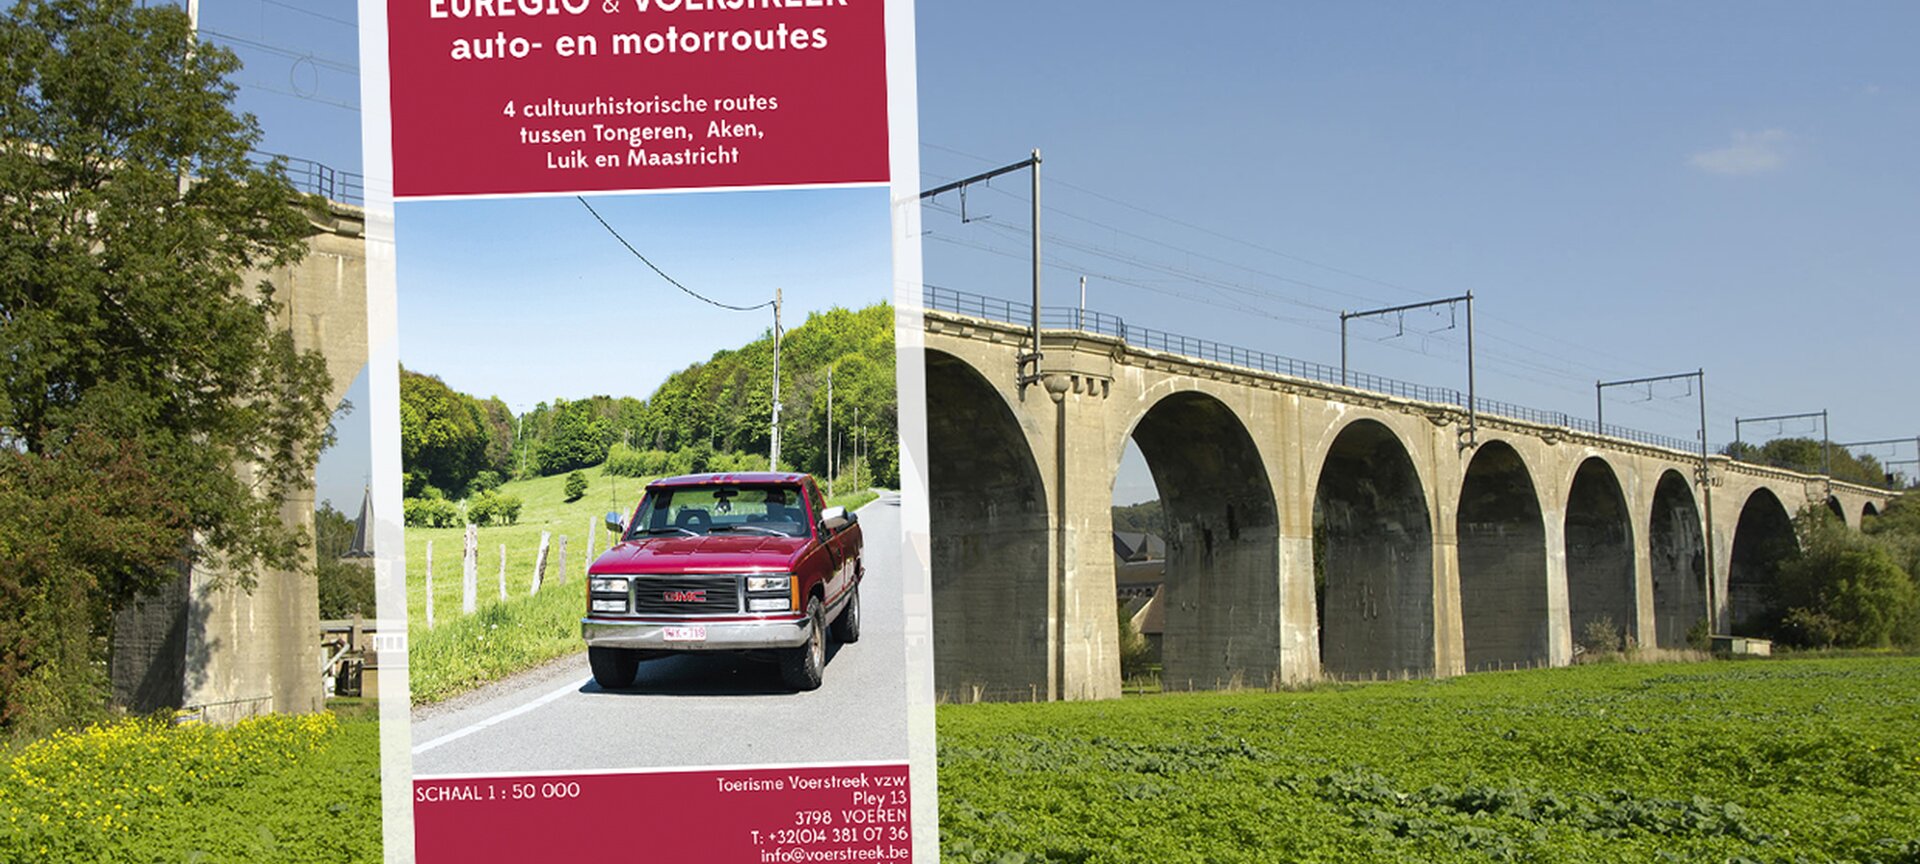 Auto- en Motorroutes Voerstreek & Euregio - auto- en motoroutes